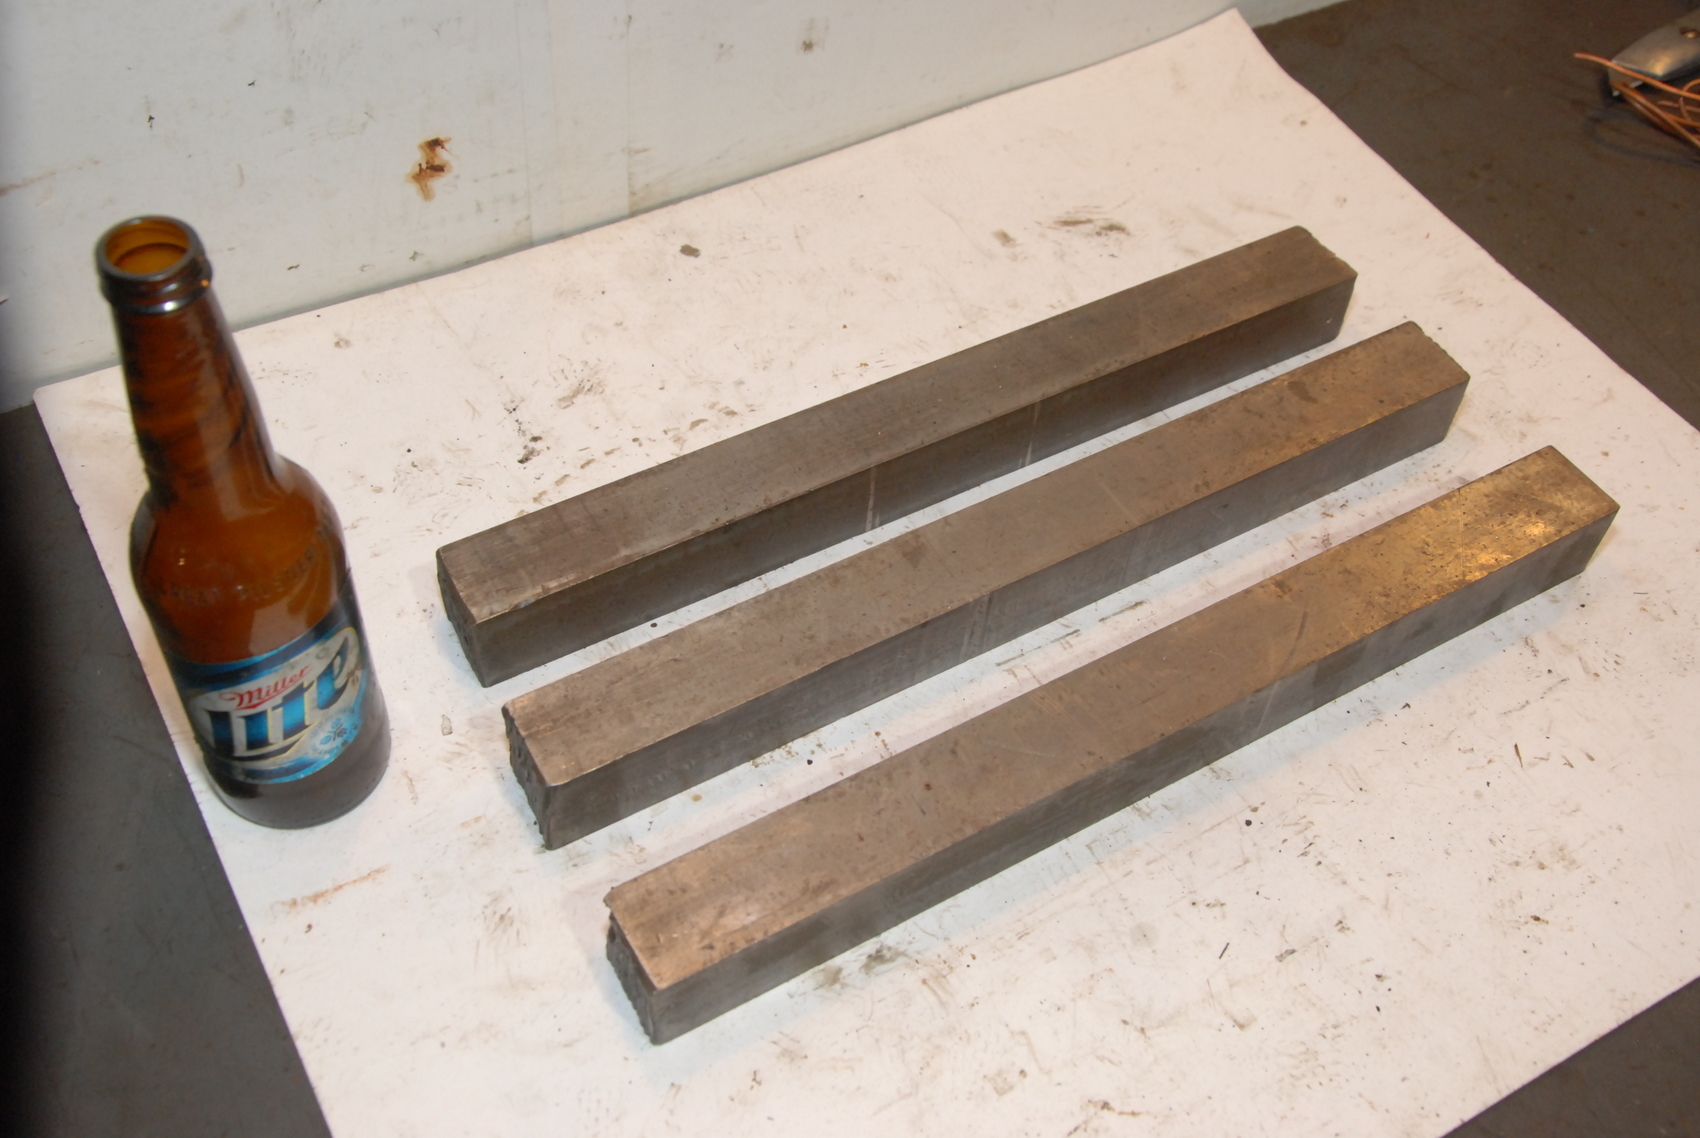 Lot of 3 steel Rectangular Bar for blacksmith anvil,16*1.5*1.5,30lbs